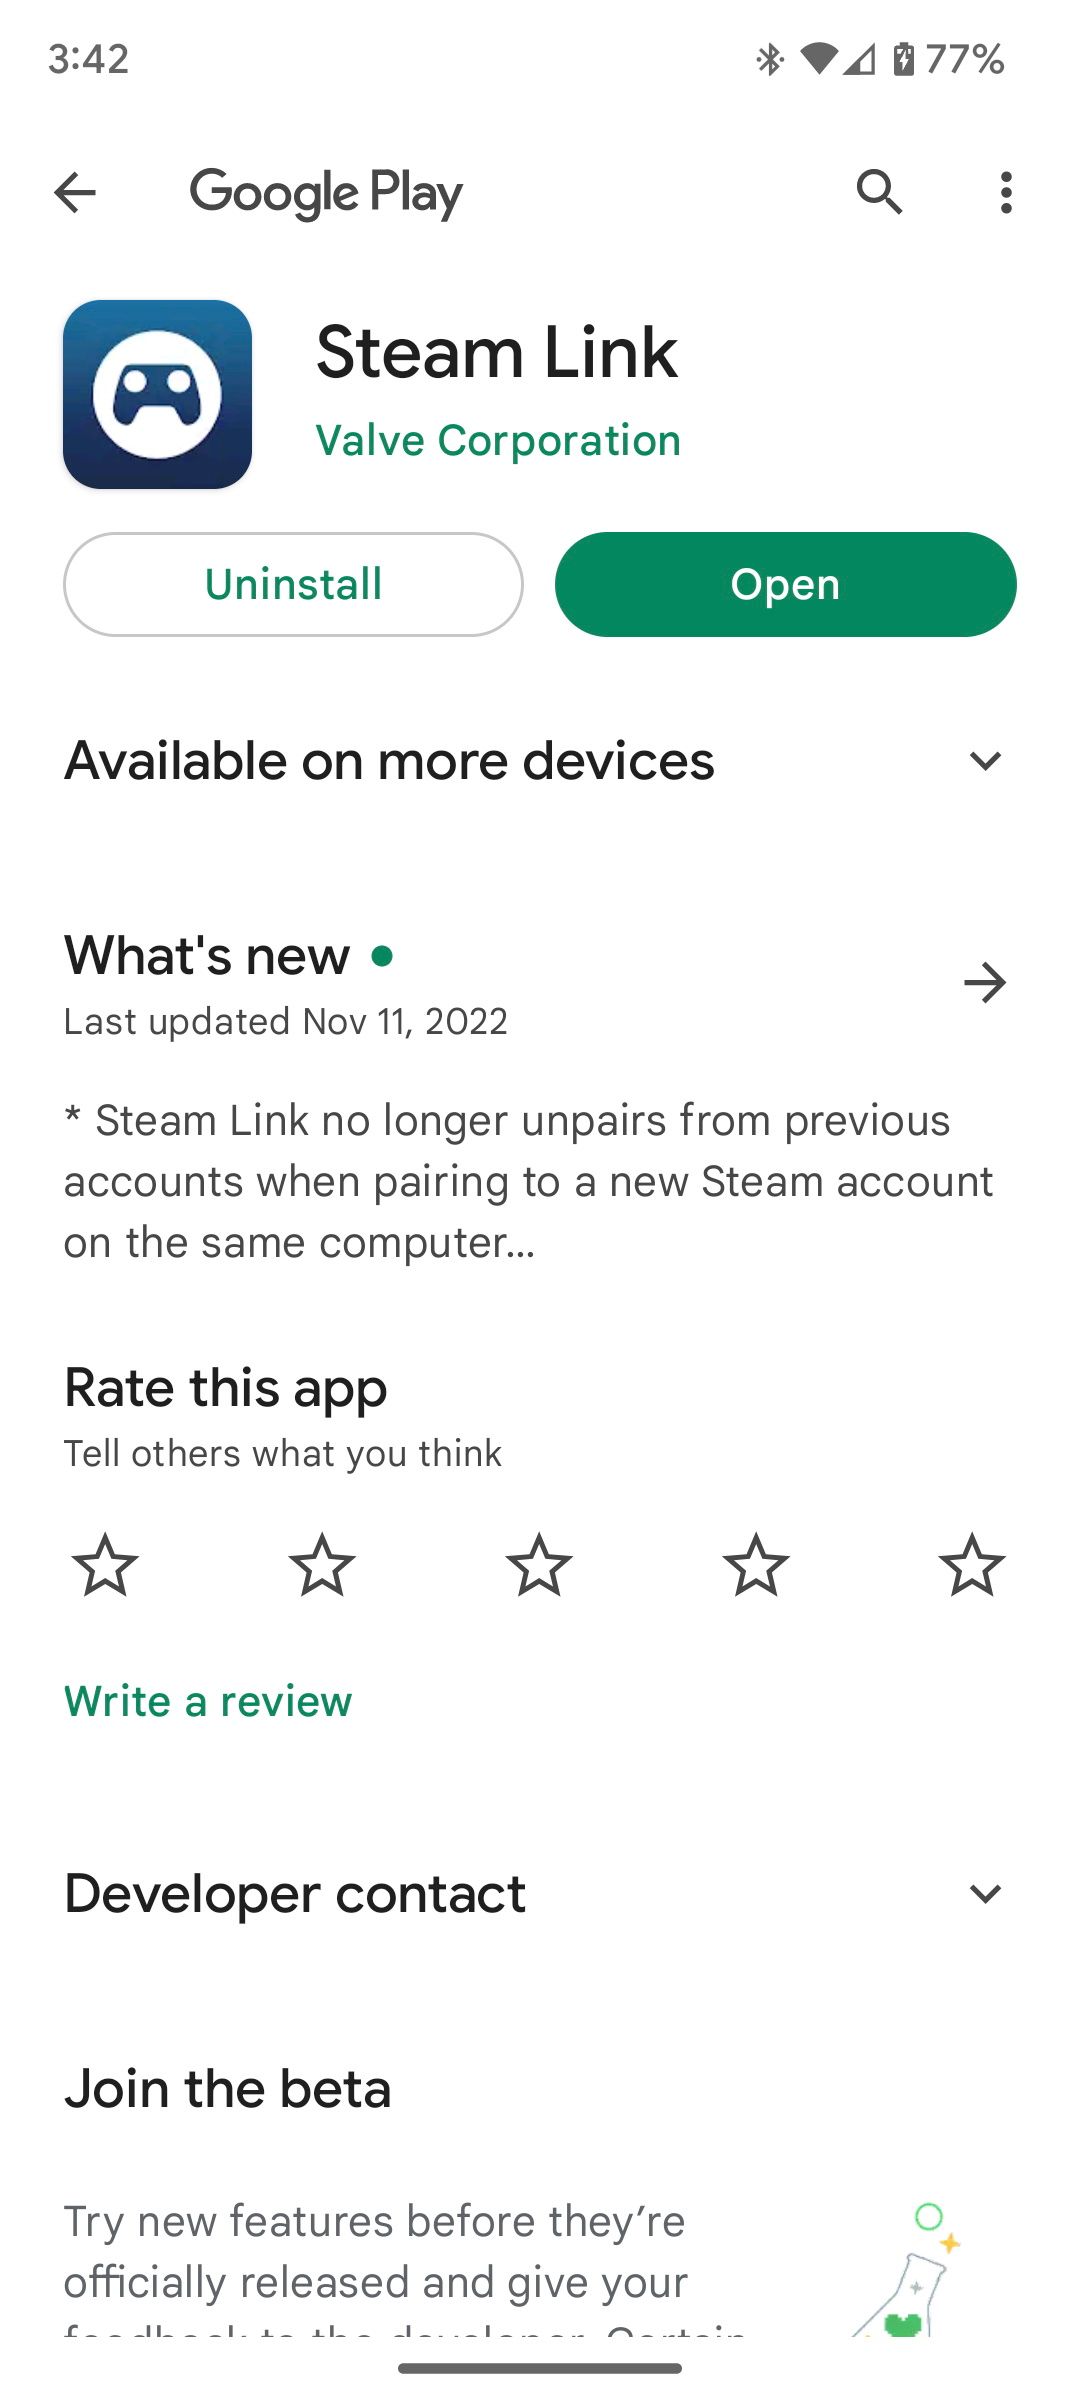 La page Android pour Steam Link